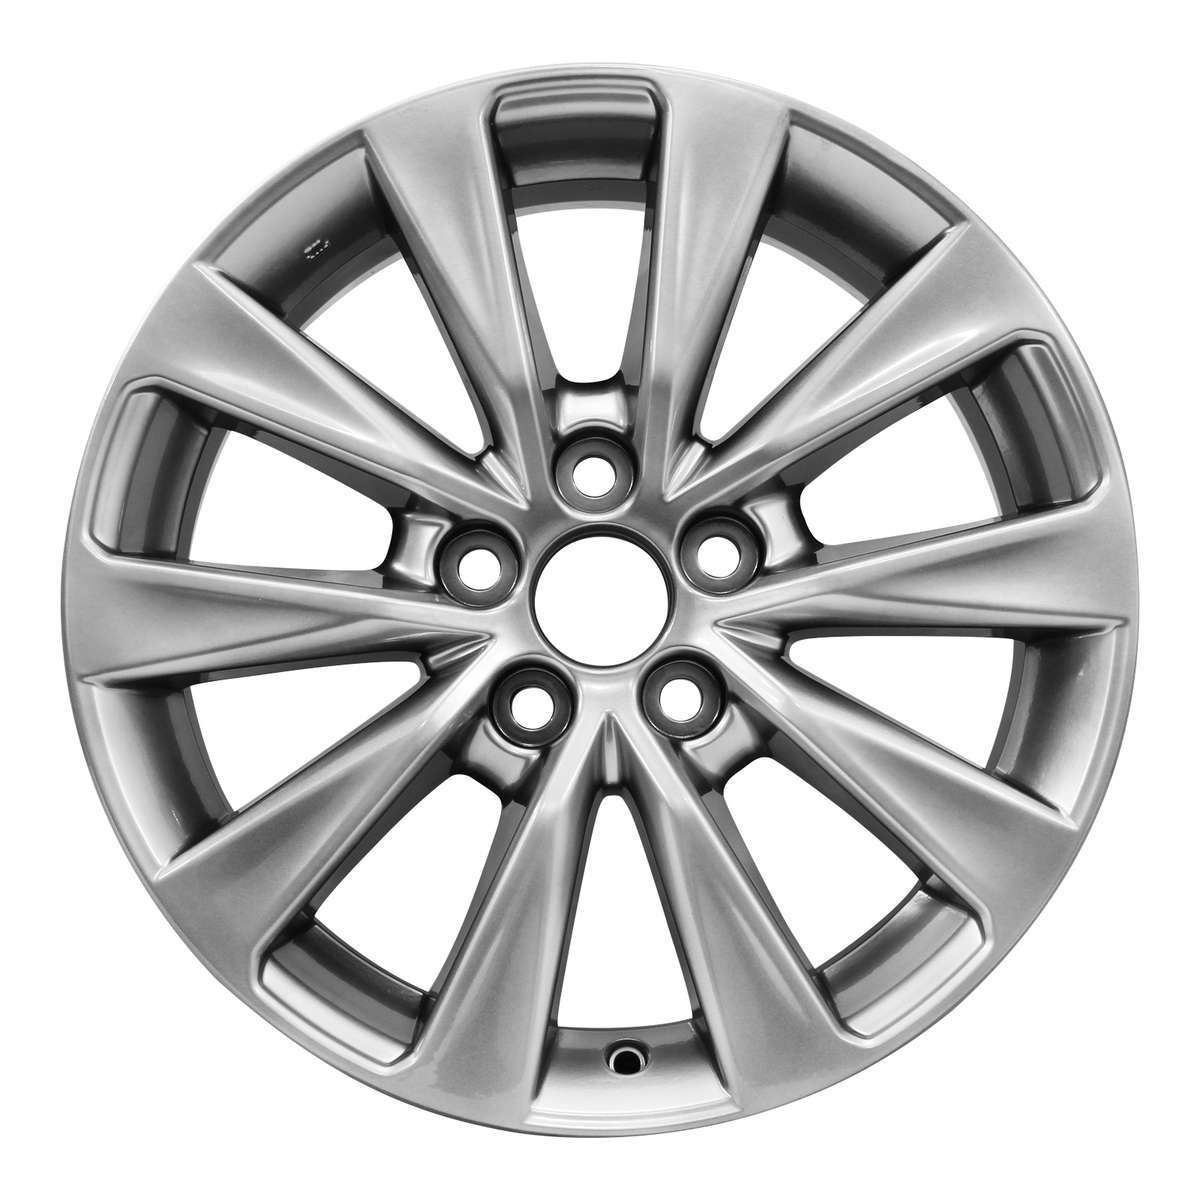 2015 Toyota Camry 17" OEM Wheel Rim W75170H